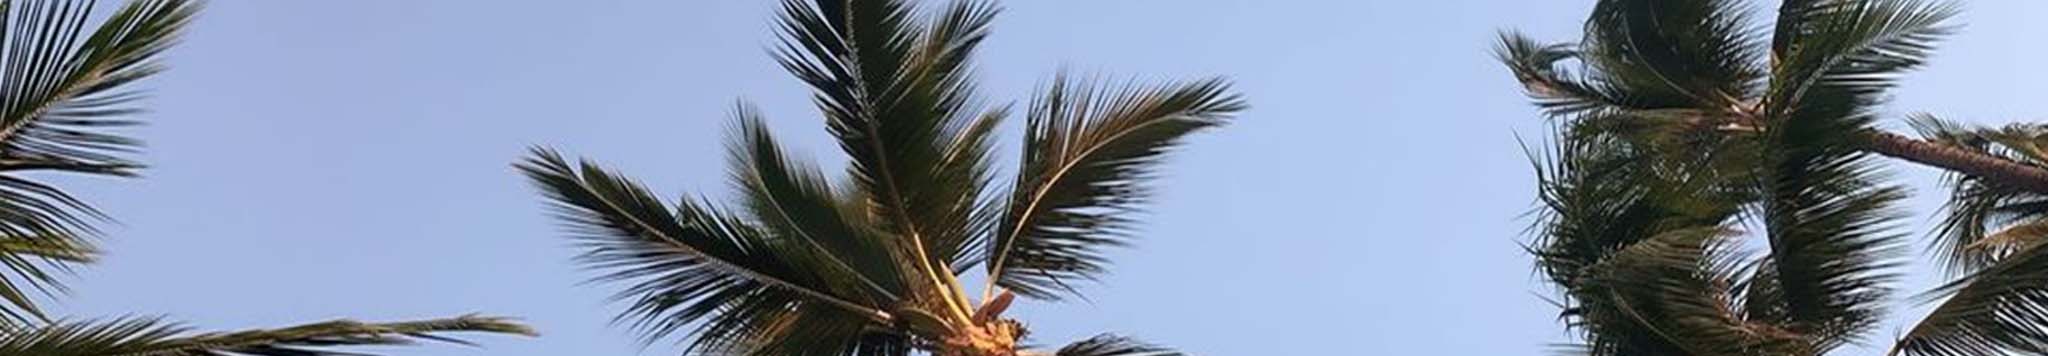 Palm palmeras